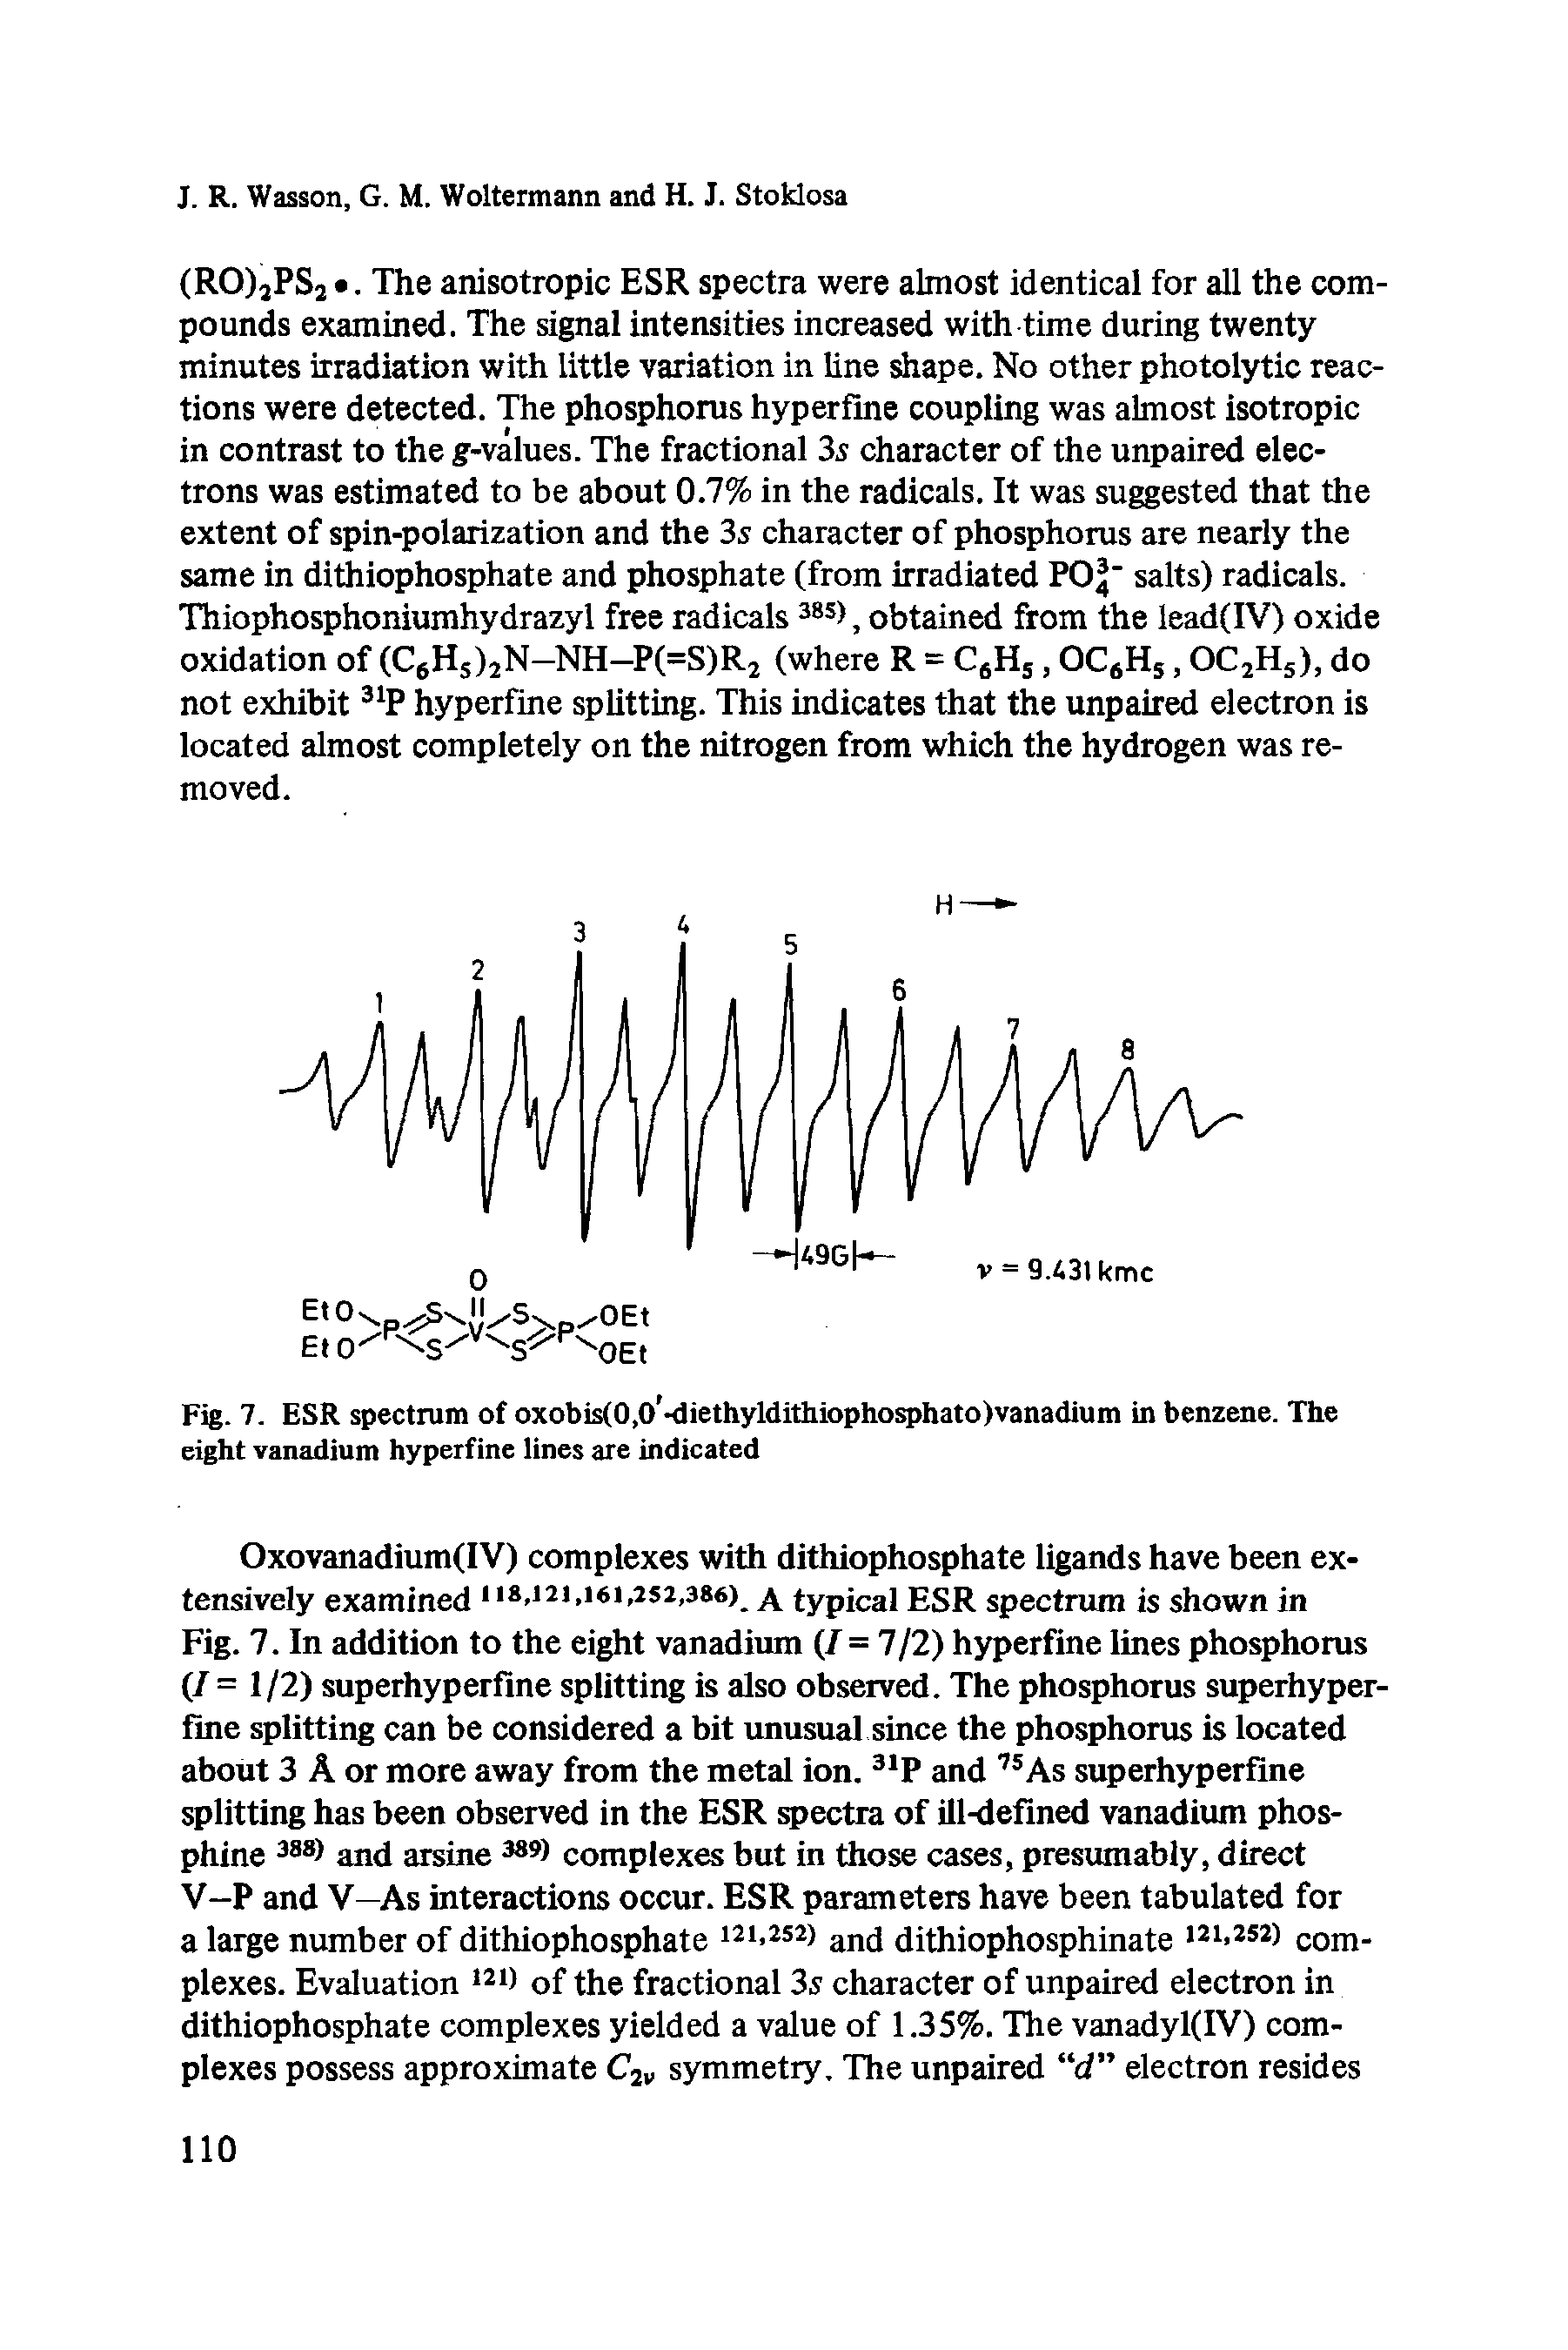 Fig. 7. ESR spectrum of oxobis(0,0 liethyldithiophosphato)vanadium in benzene. The eight vanadium hyperfine lines are indicated...